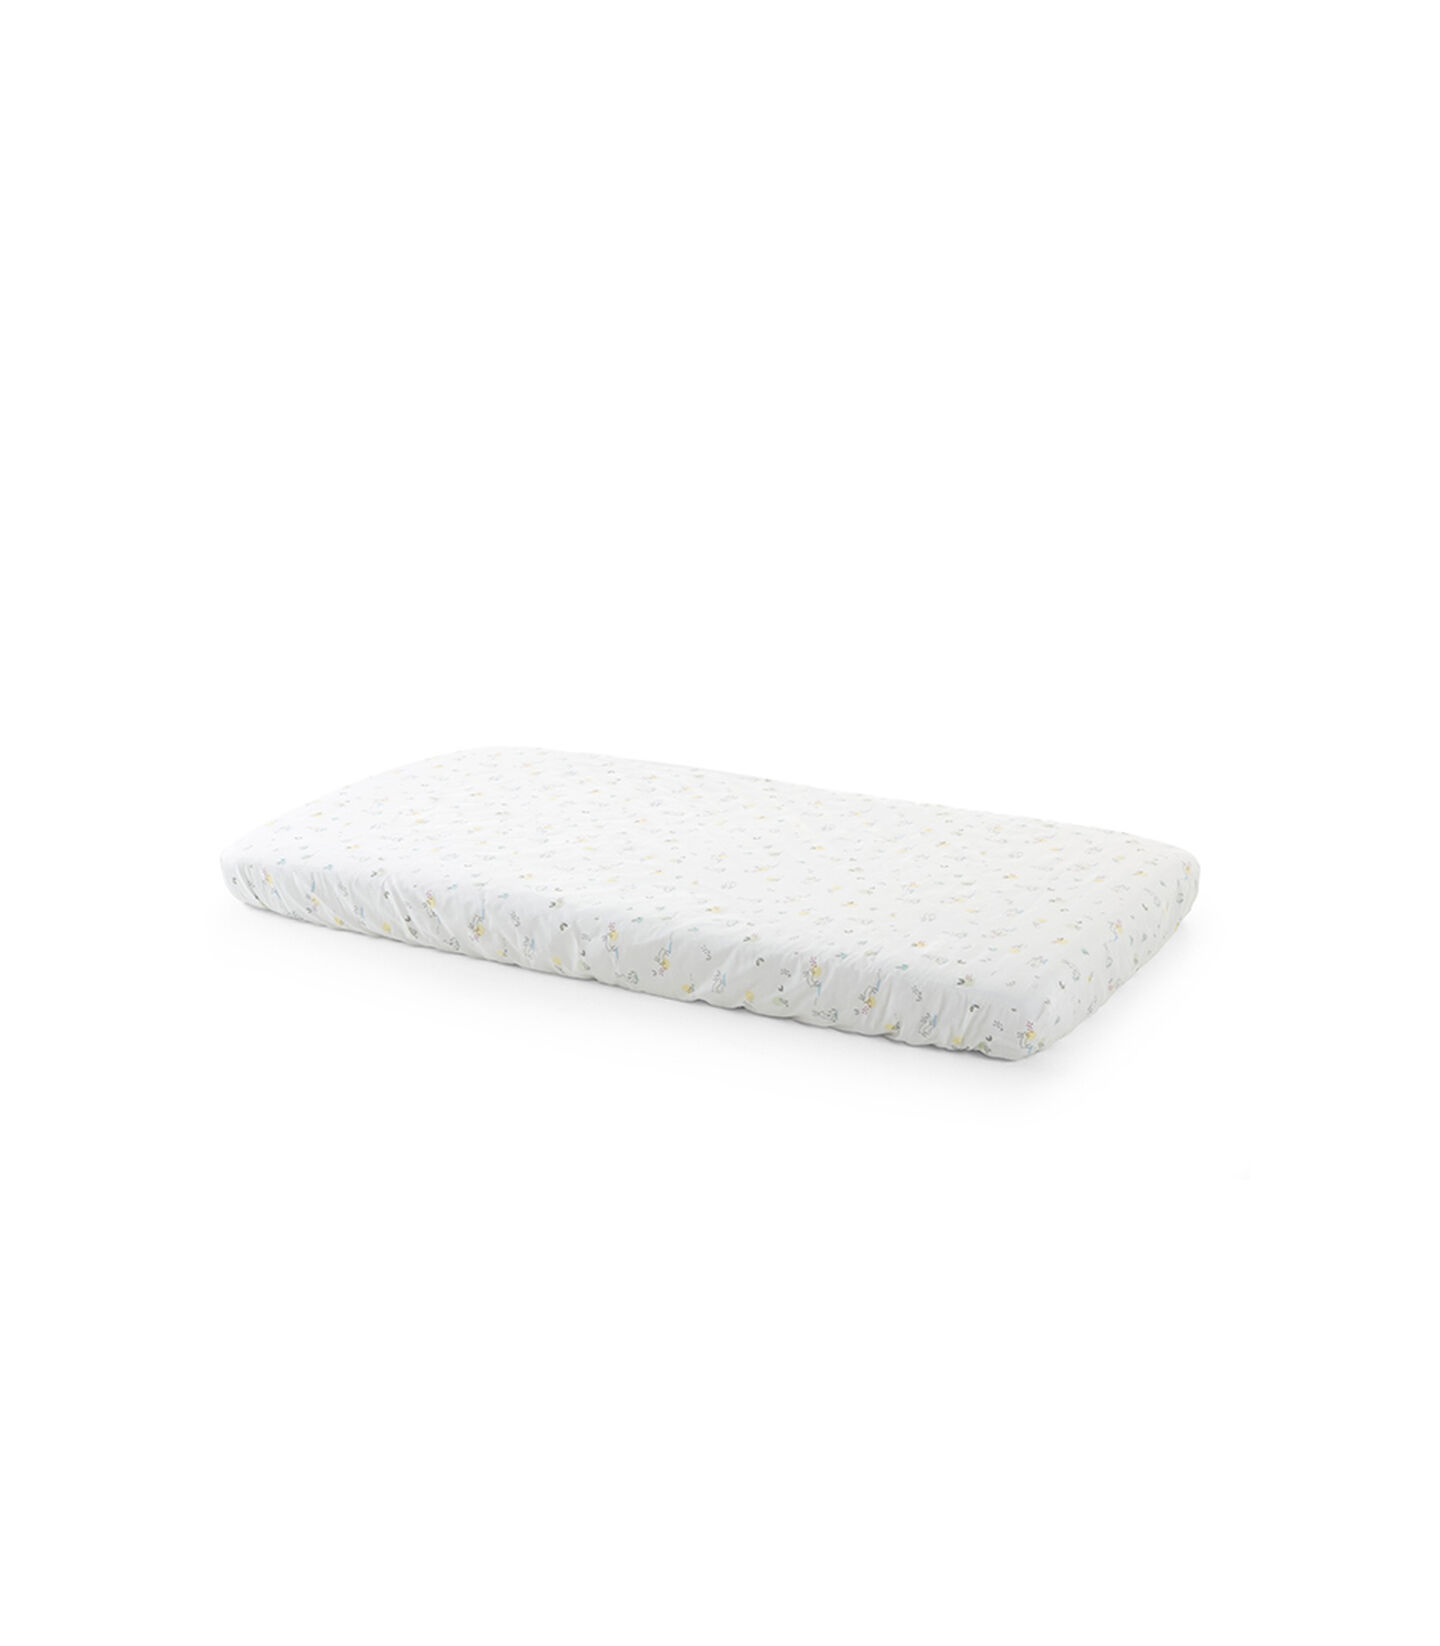 Stokke® Home™ Bed Fitted Sheet - prześcieradło, 2 szt. - Soft Rabbit, Soft Rabbit, mainview view 1